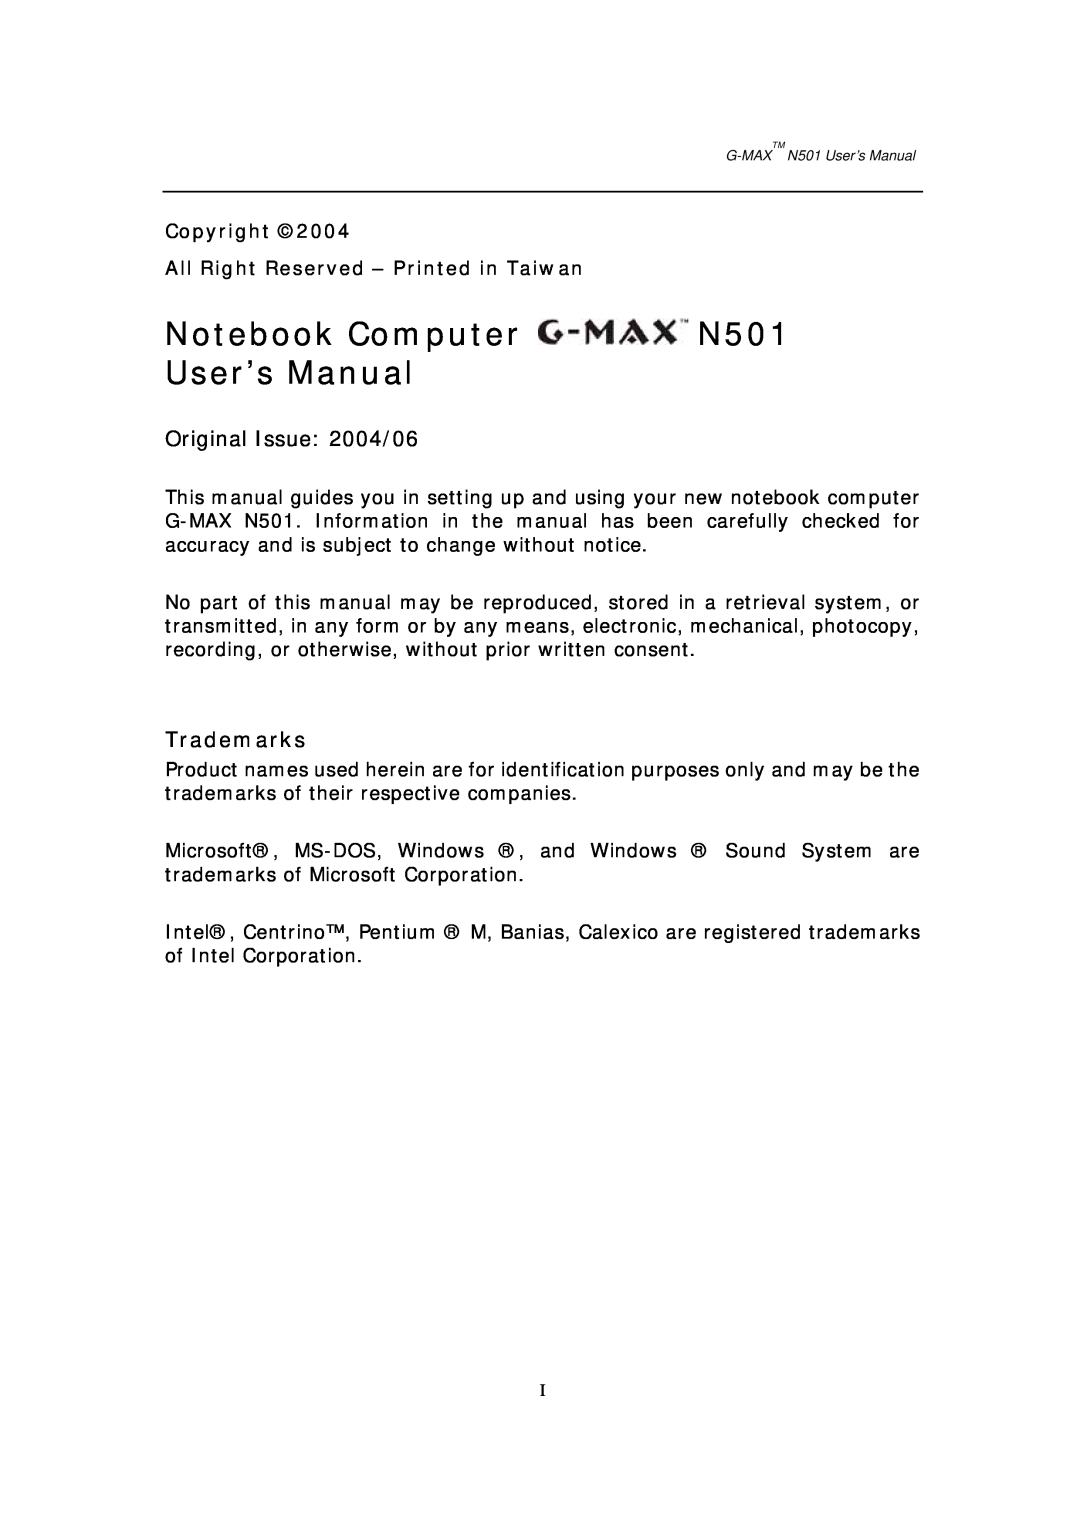 Gigabyte G-MAX N501 user manual Notebook Computer N501 User’s Manual, Trademarks 